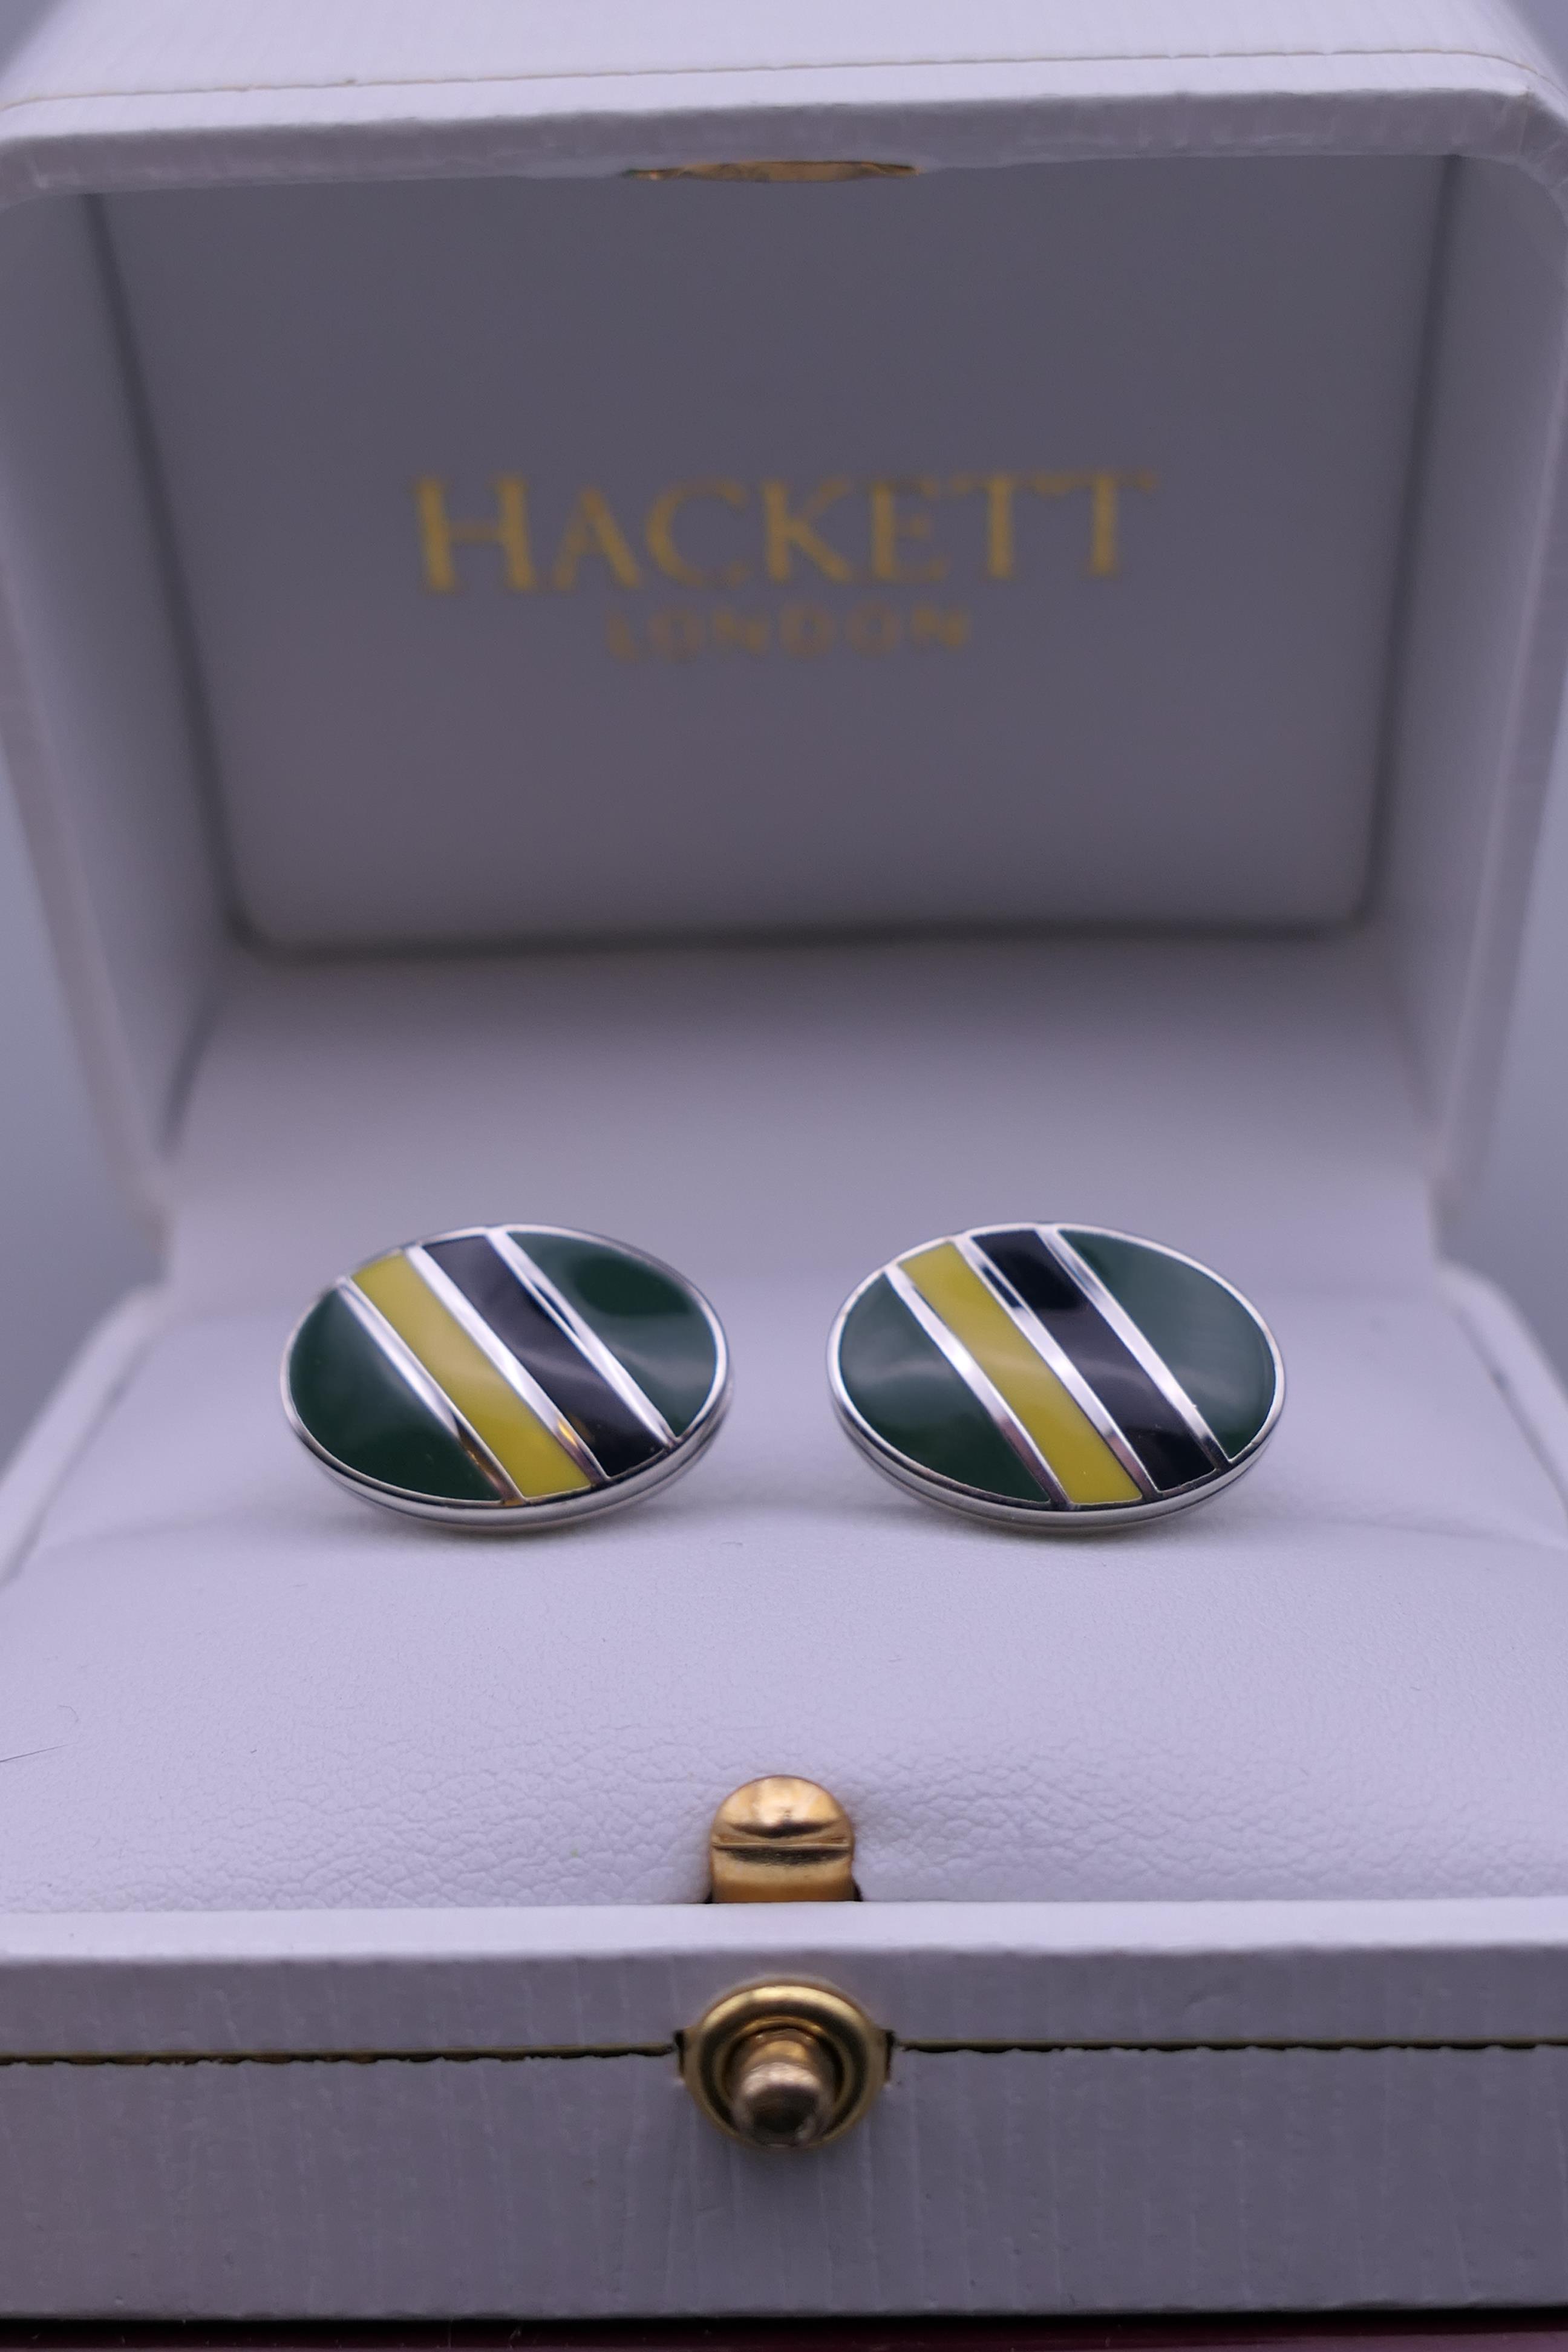 A pair of Hackett cufflinks.